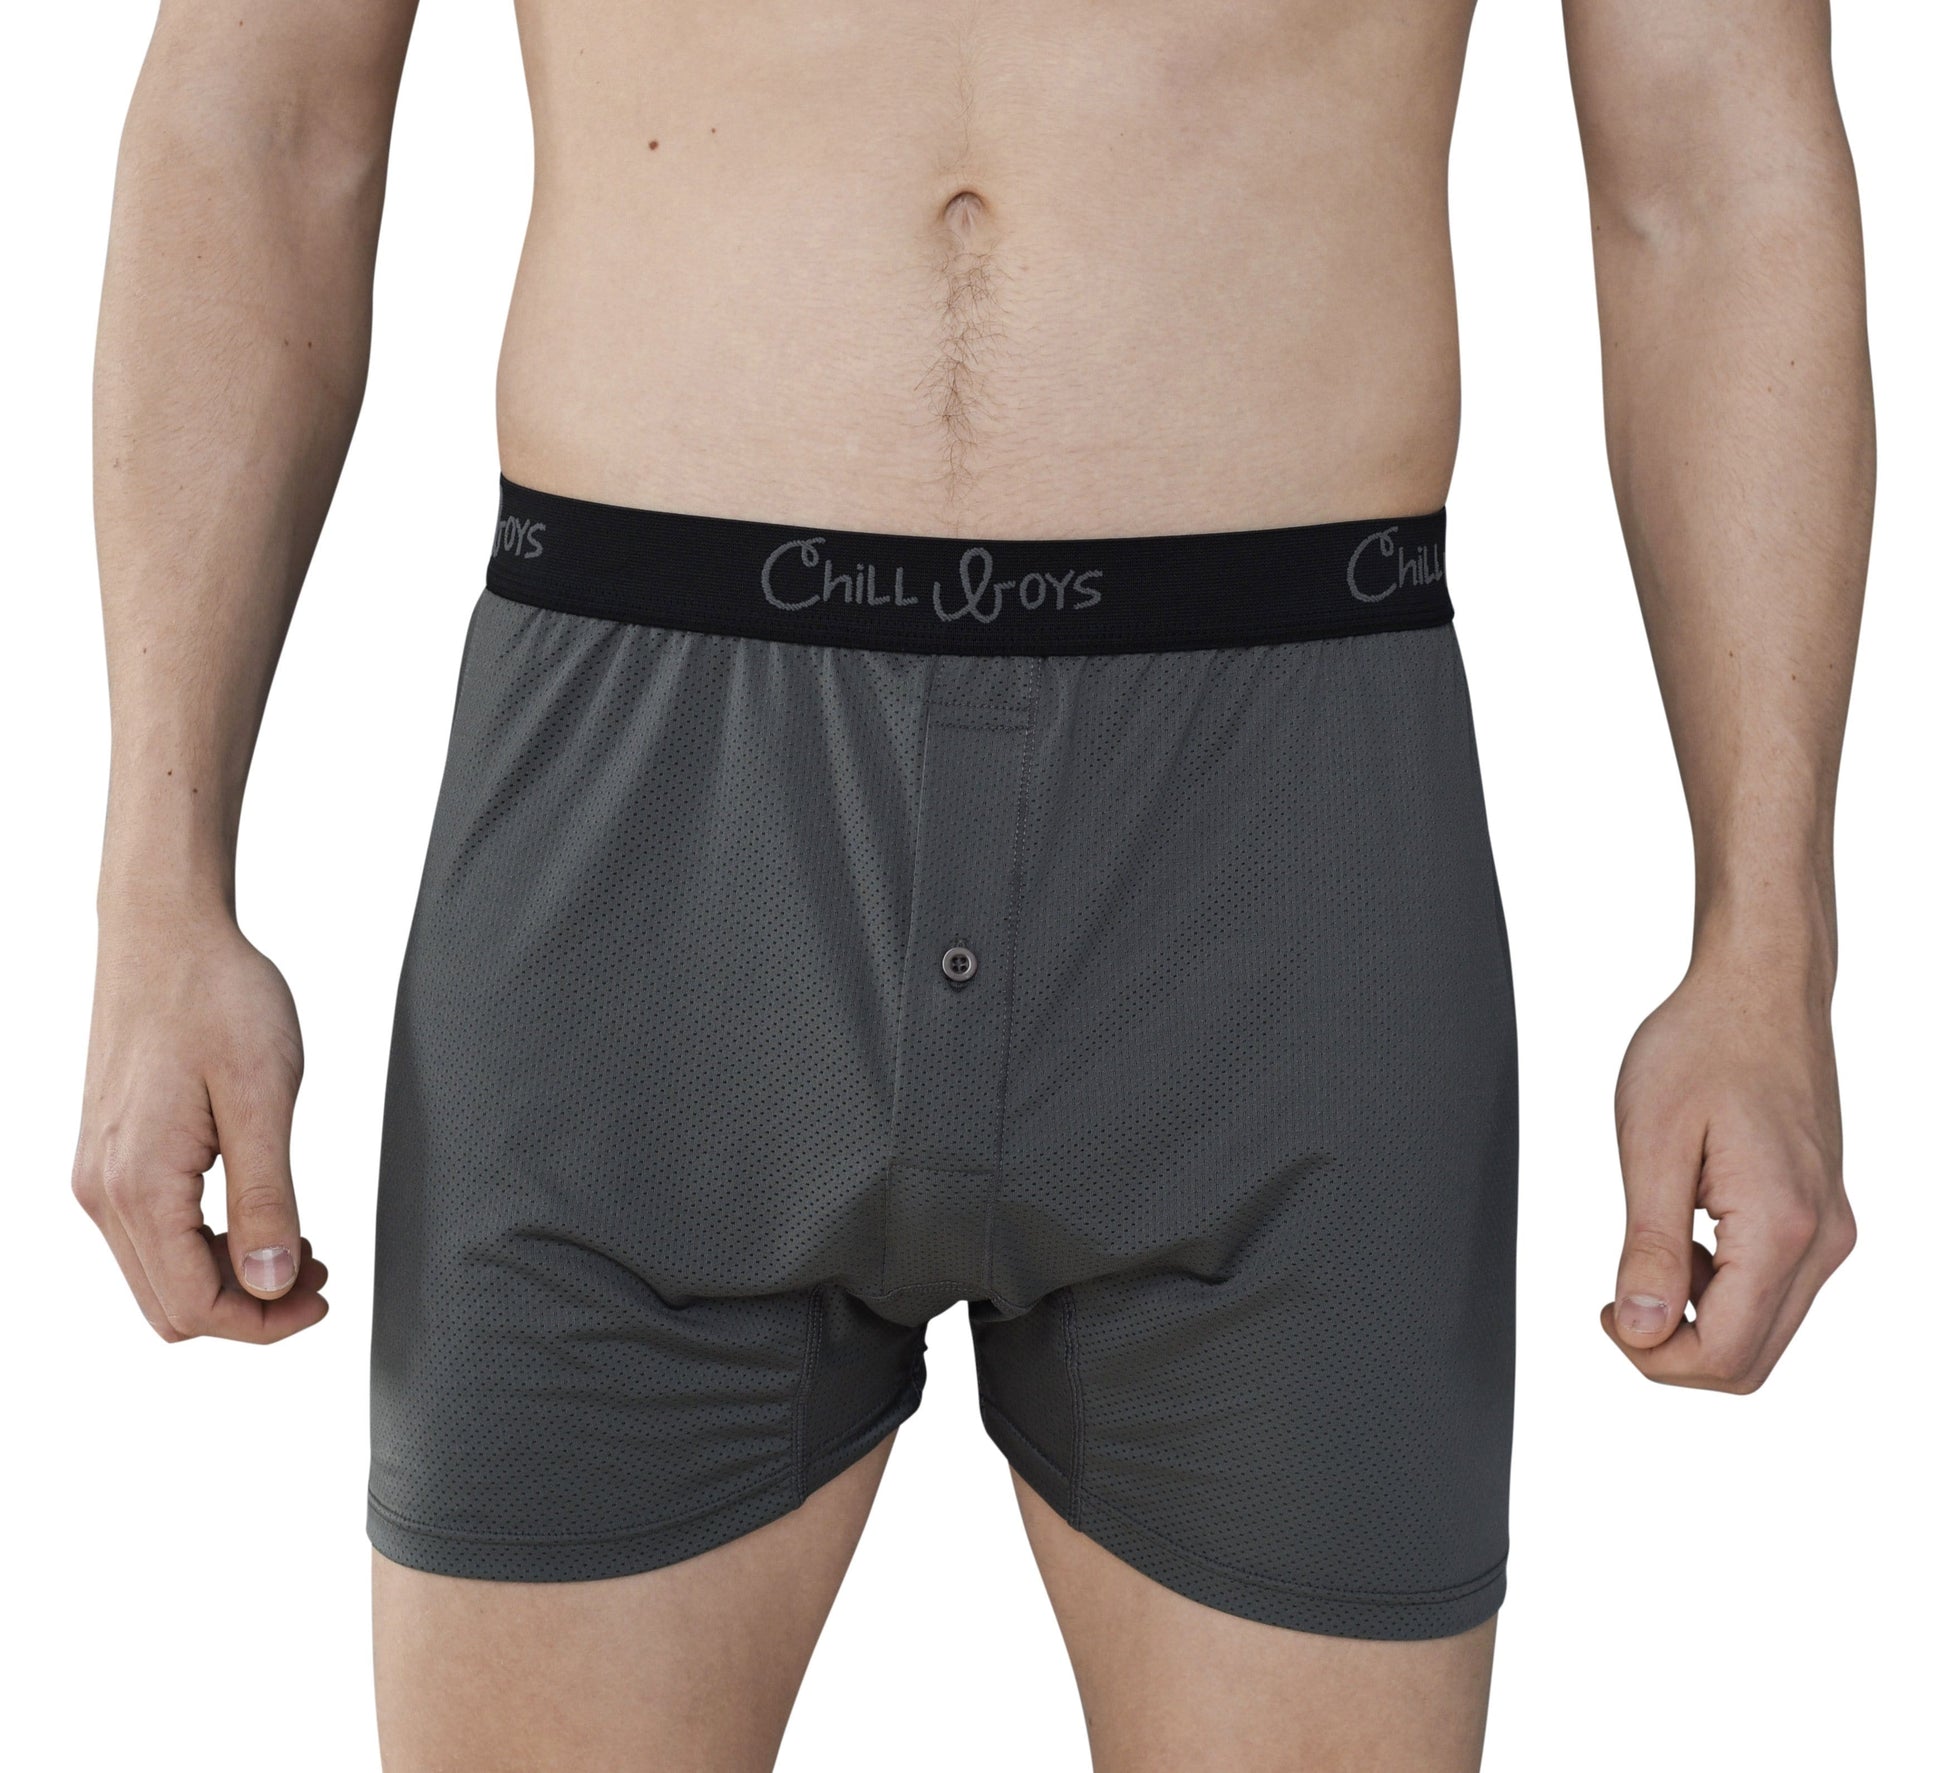 Men's Boxer Briefs, Underwear, Breathable & More